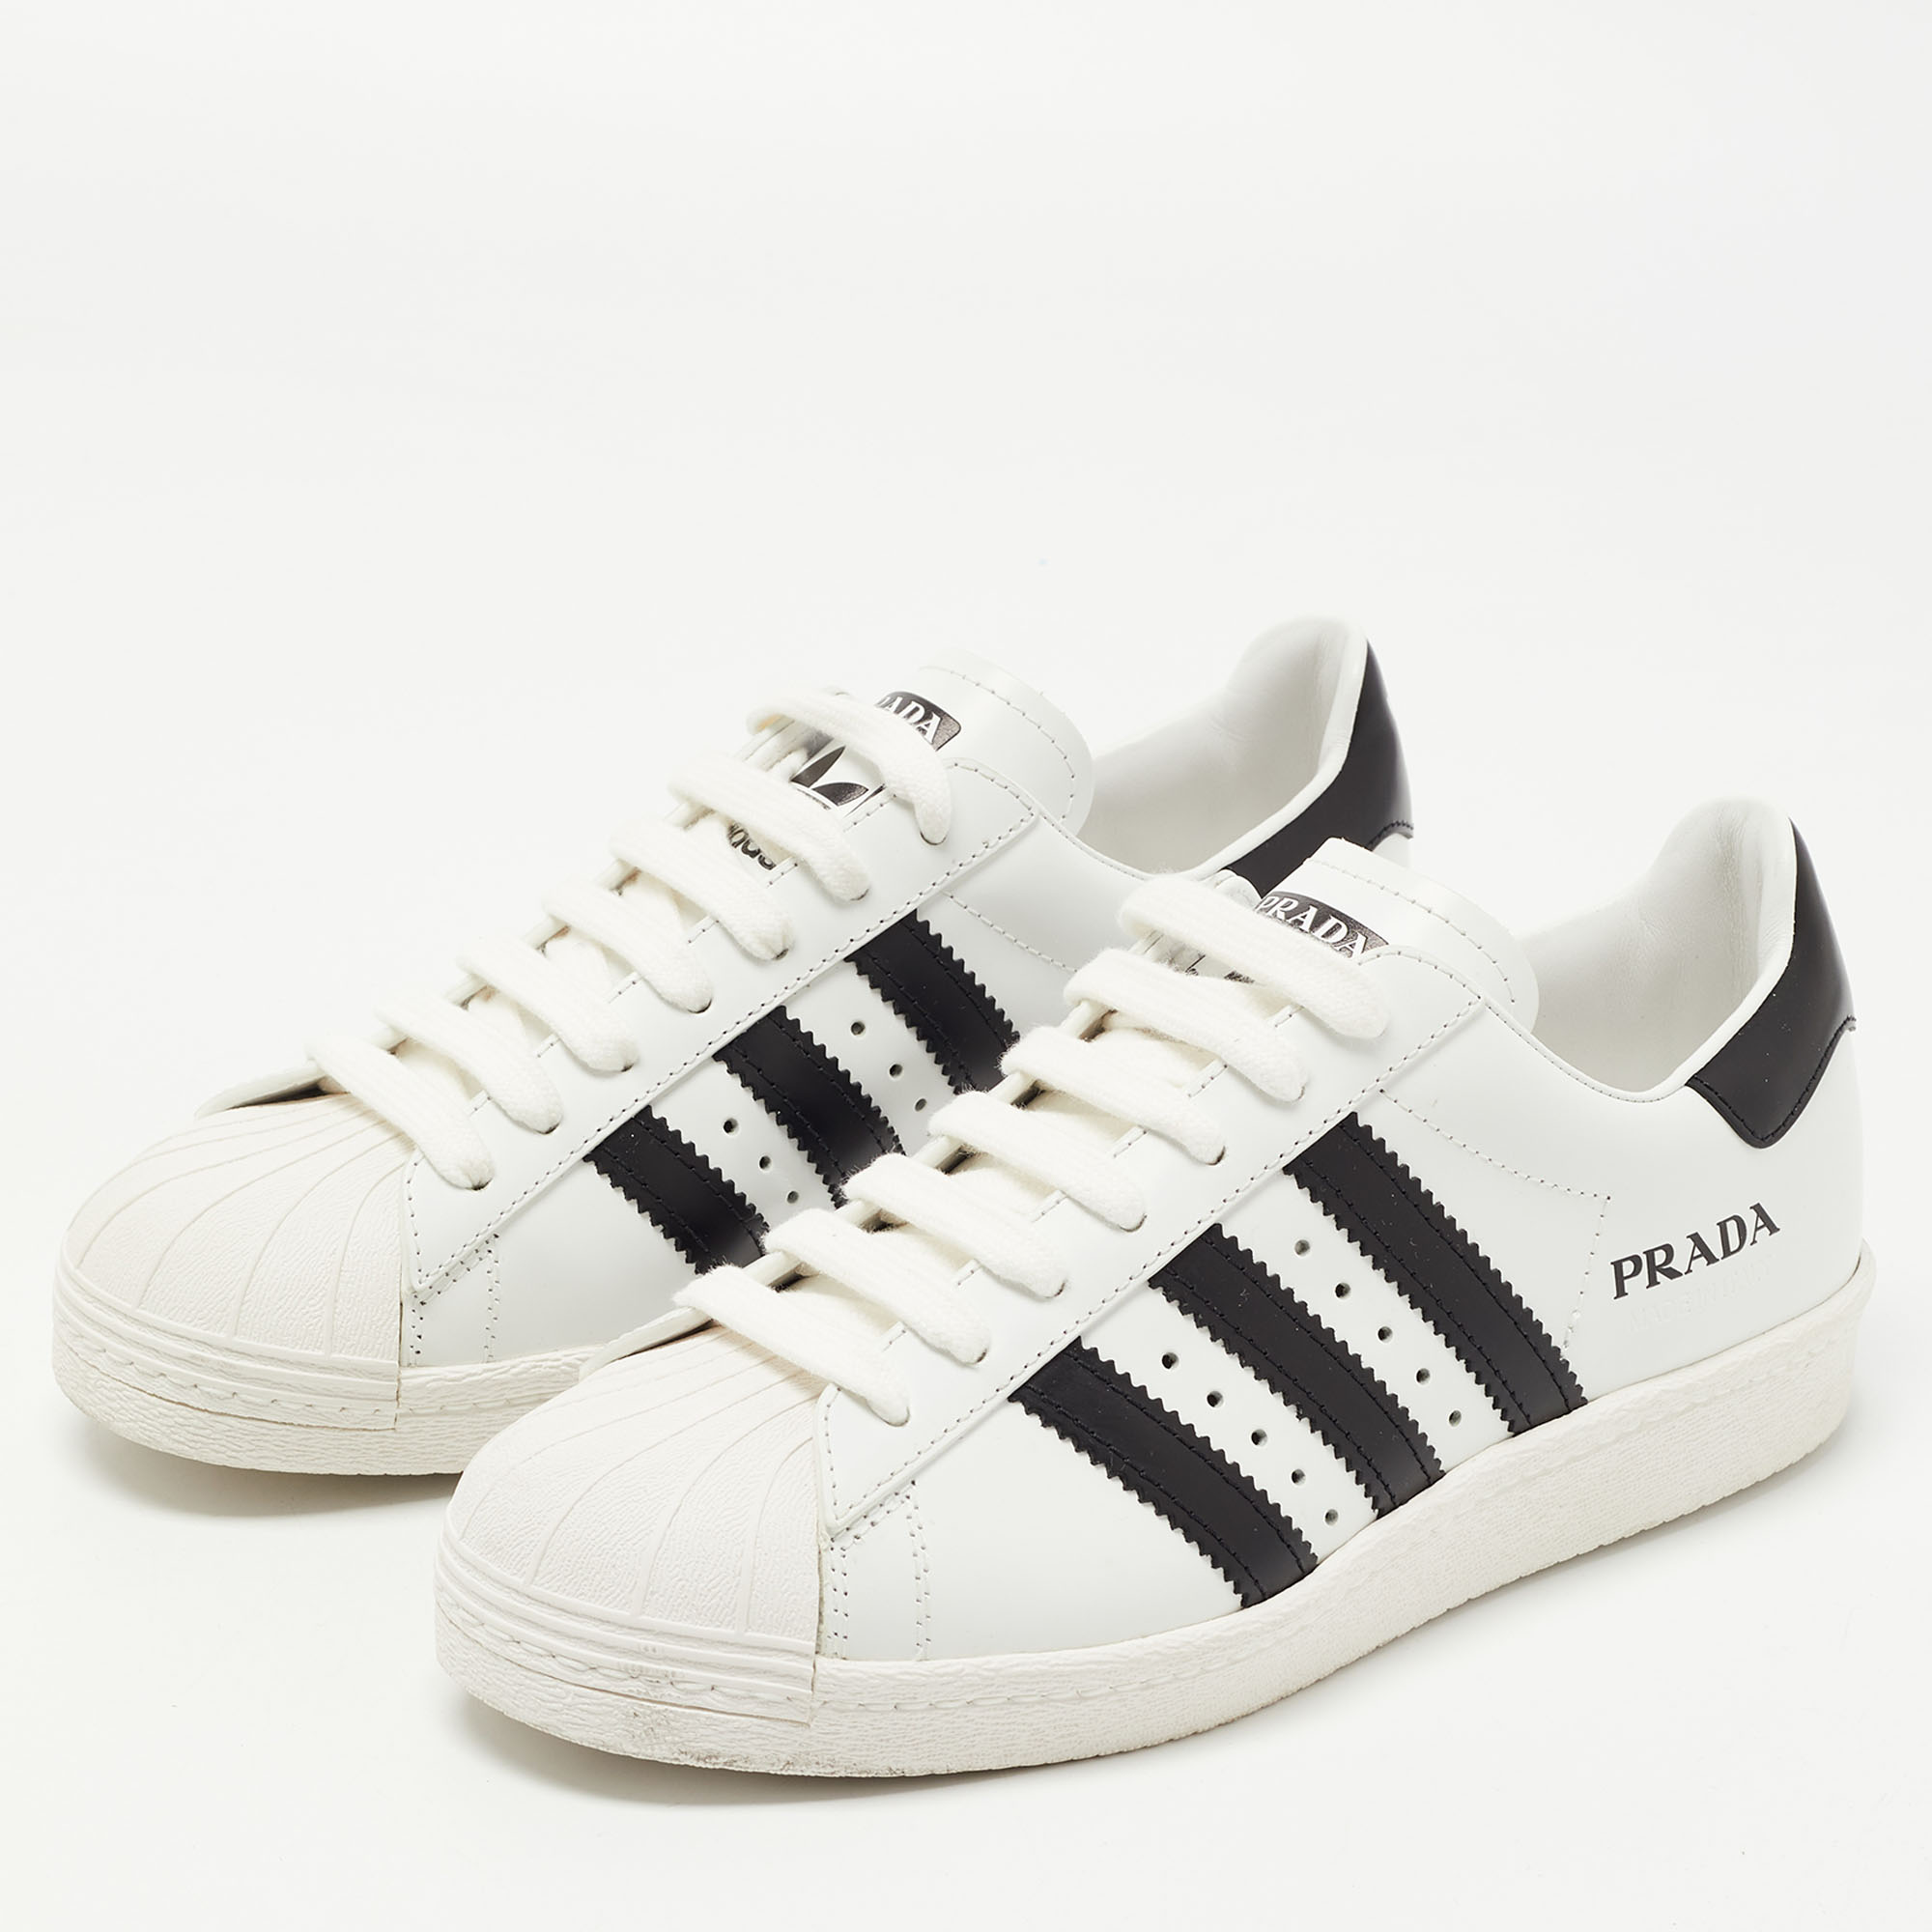 

Prada x Adidas White/Black Leather Superstar Sneakers Size  1/3